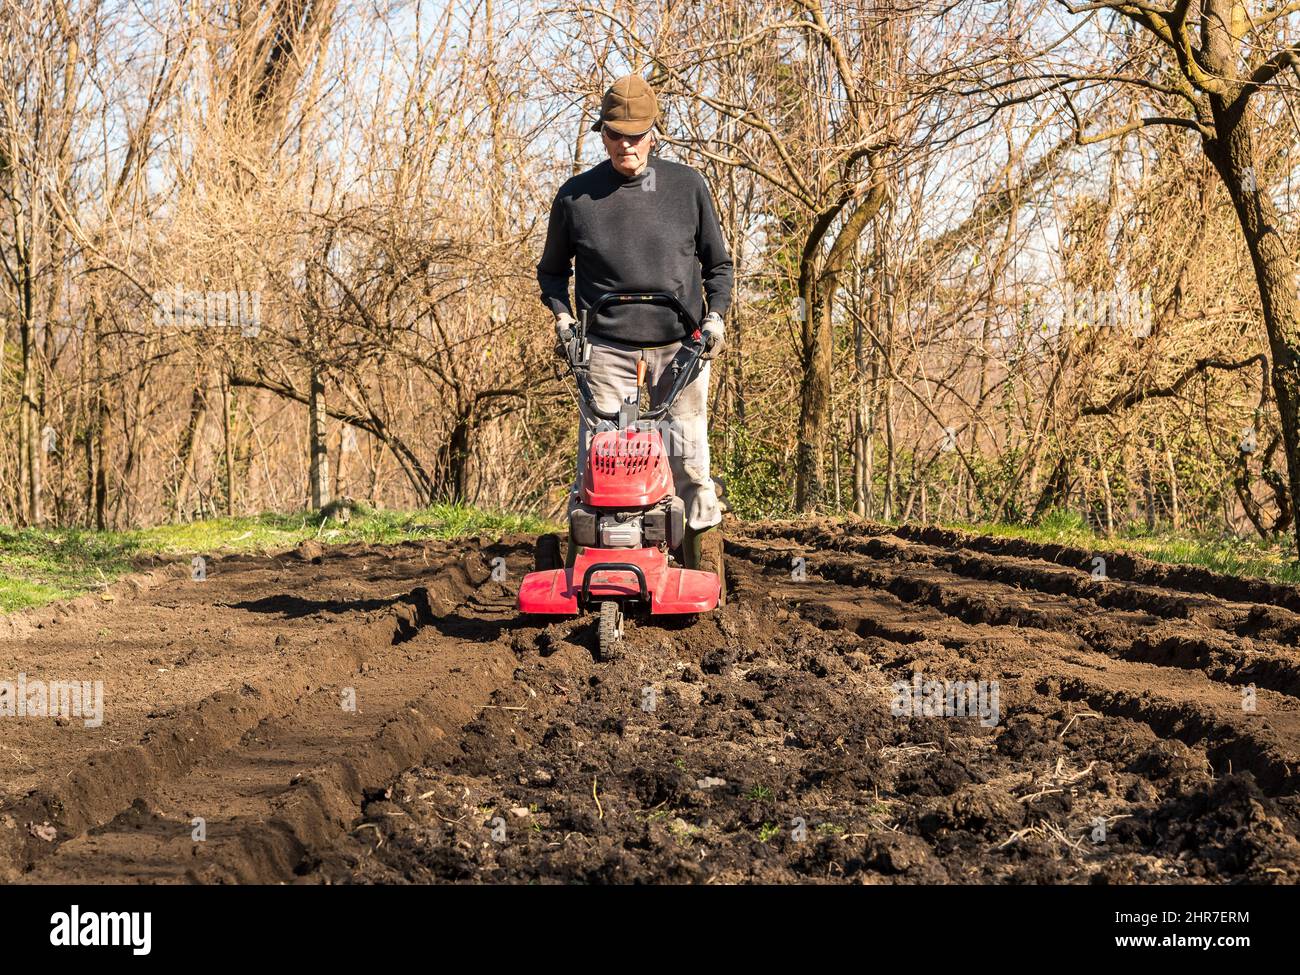 Senior man tilling ground soil with a rototiller in the garden. Spring garden preparation for seeding. Stock Photo